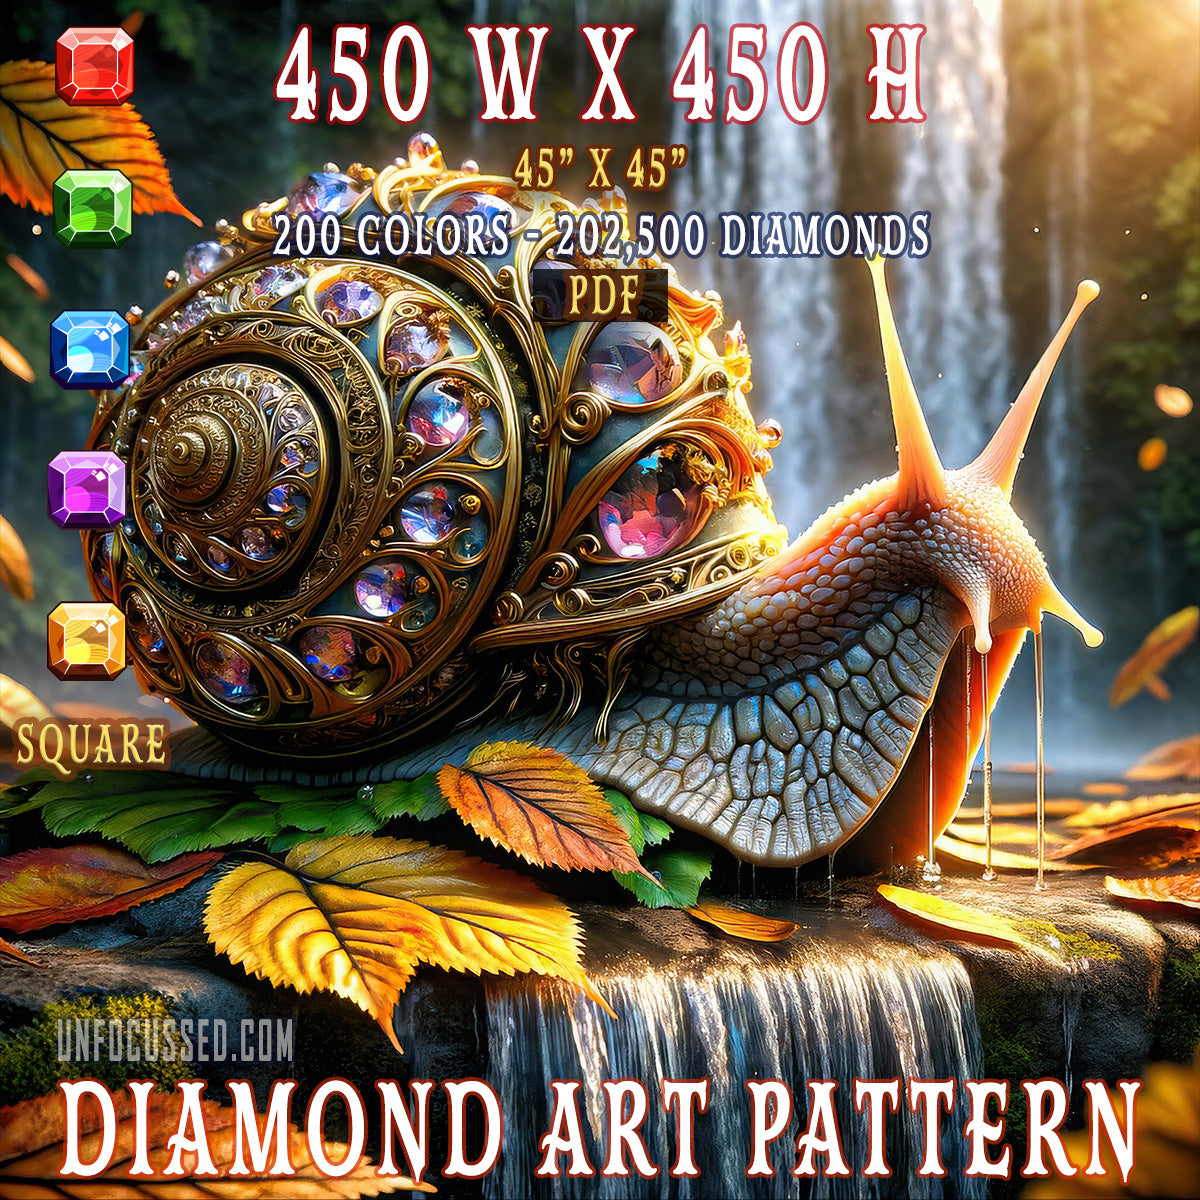 The Gilded Escargot Diamond Art Pattern